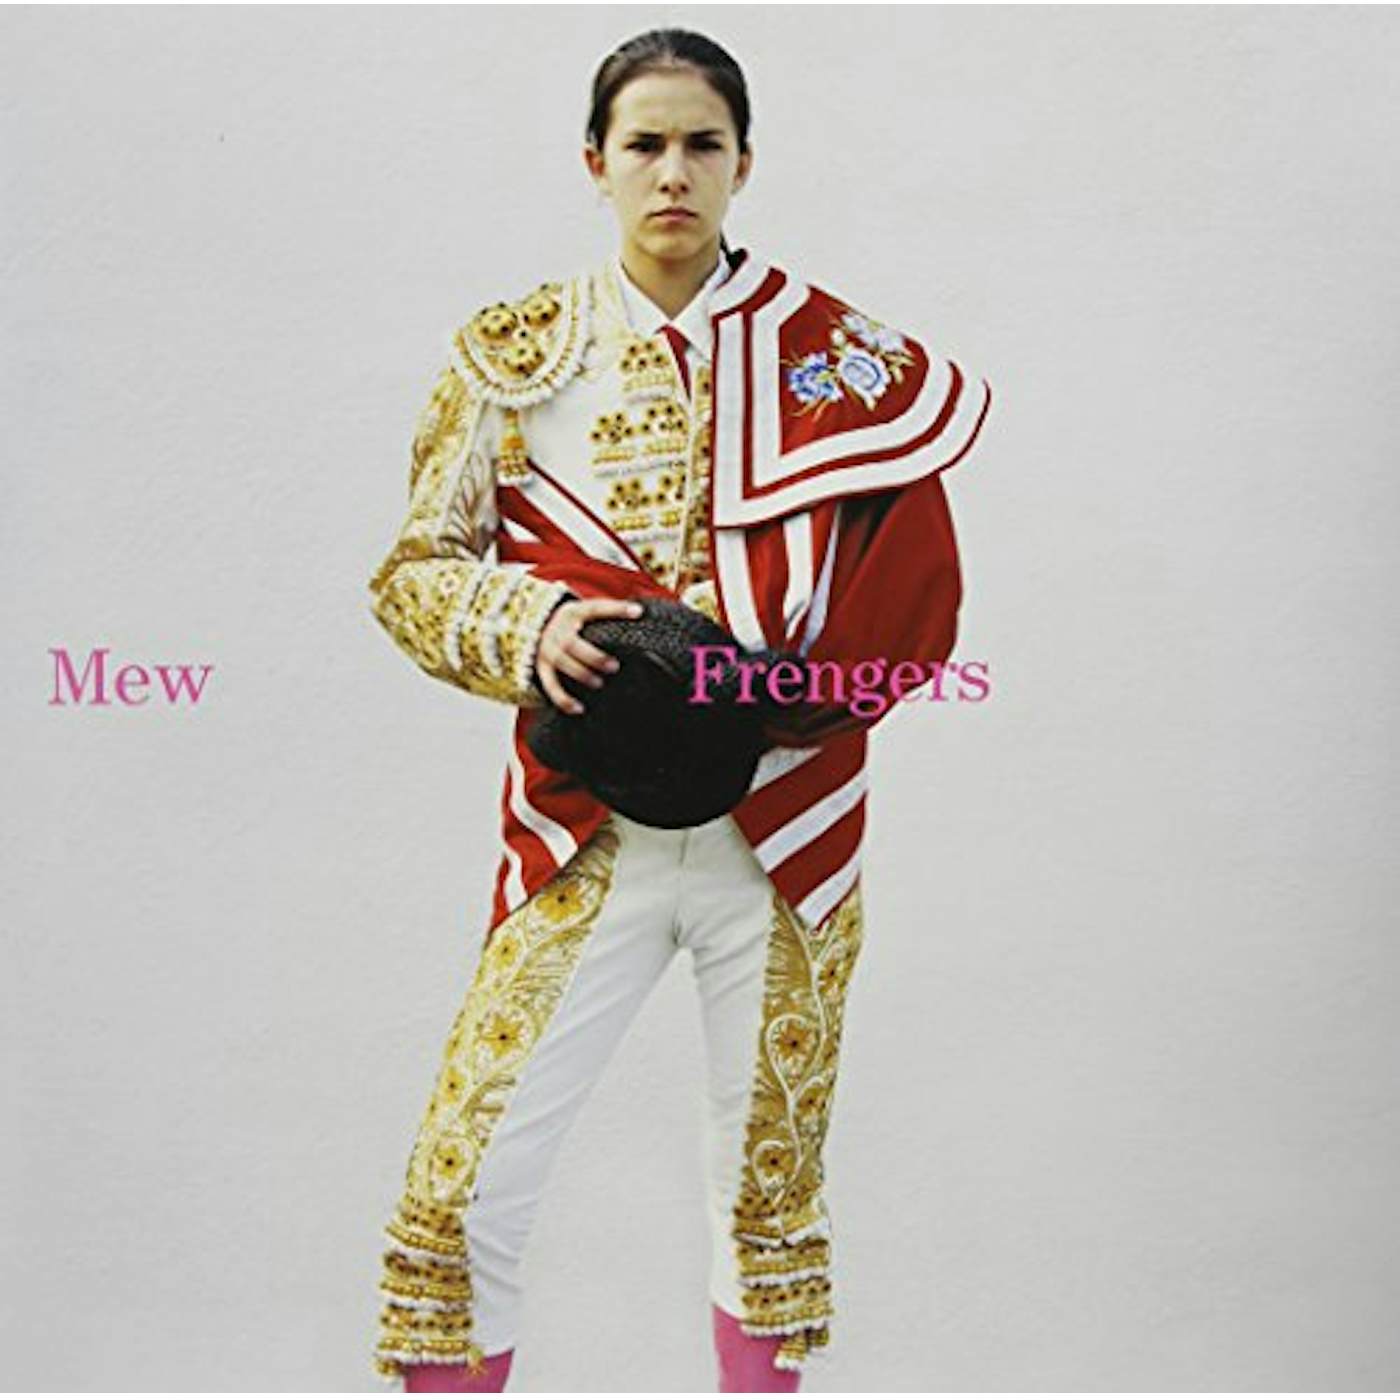 Mew FRENGERS (BONUS TRACKS) Vinyl Record - Gatefold Sleeve, Red Vinyl, Limited Edition, 180 Gram Pressing